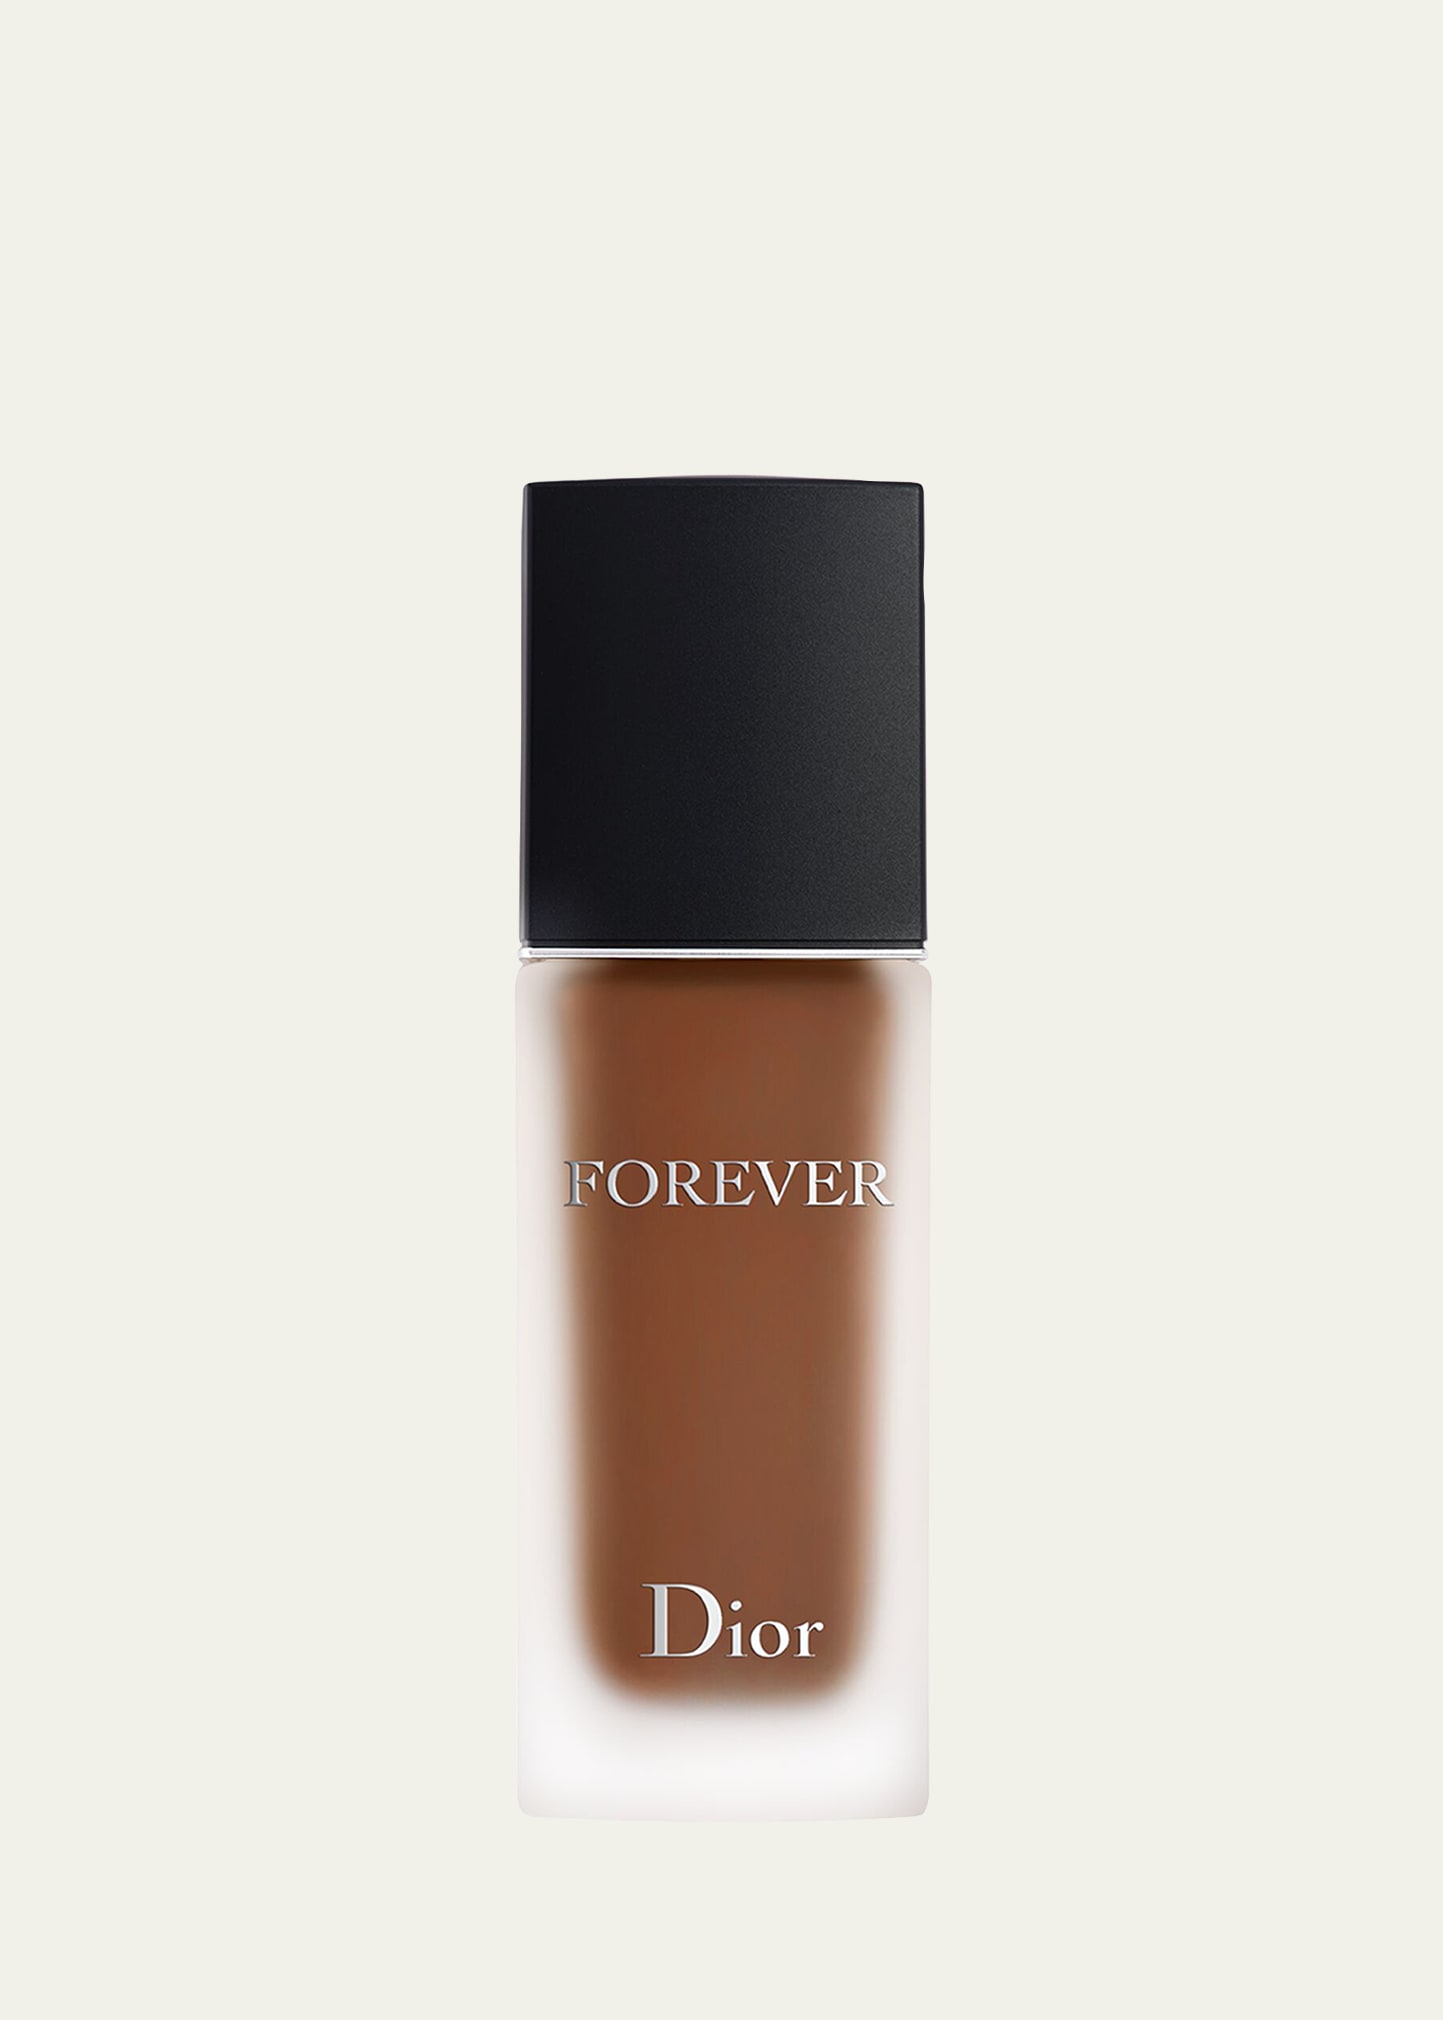 Dior 1 Oz. Forever Matte Skincare Foundation Spf 15 In 7.5 Neutral